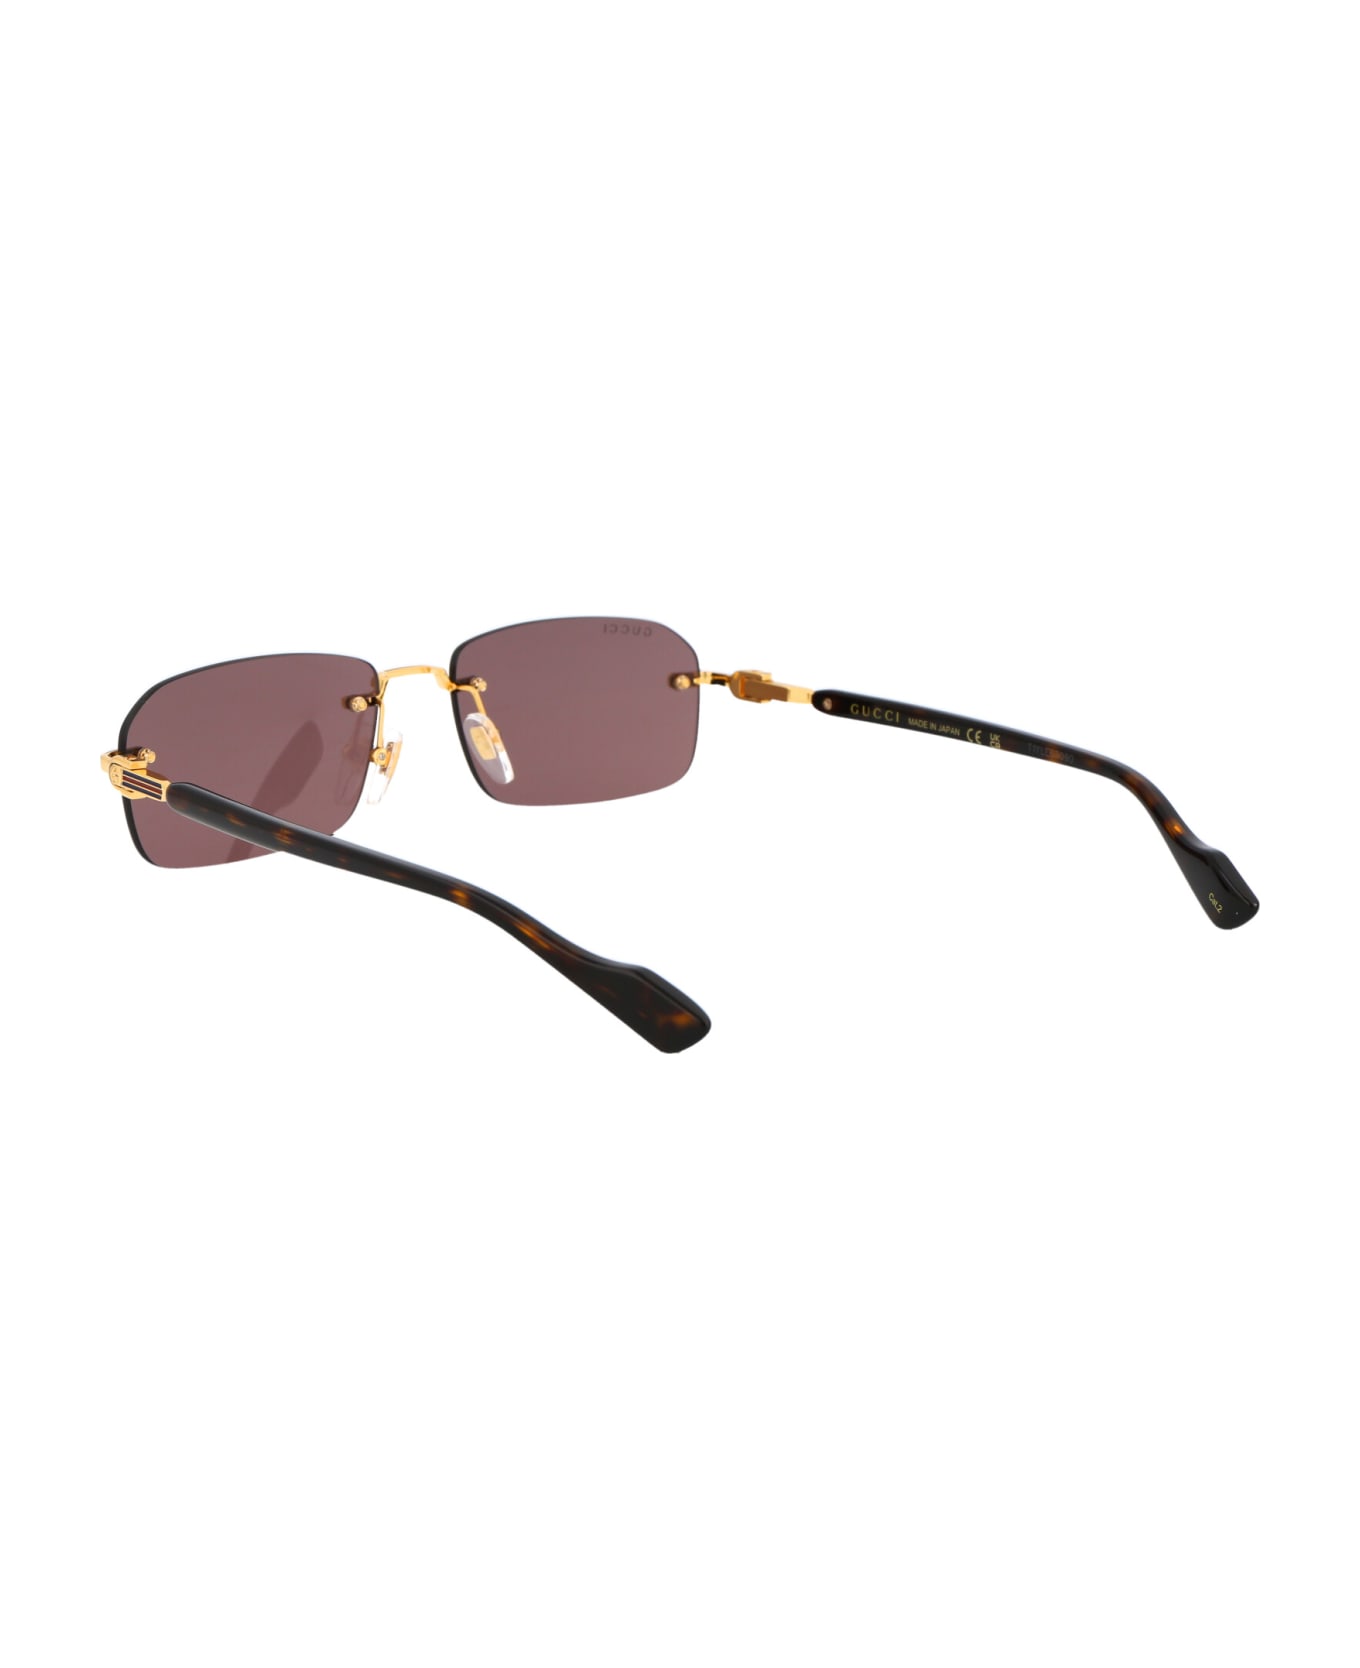 Gucci Eyewear Gg1221s Sunglasses - 002 GOLD HAVANA BROWN